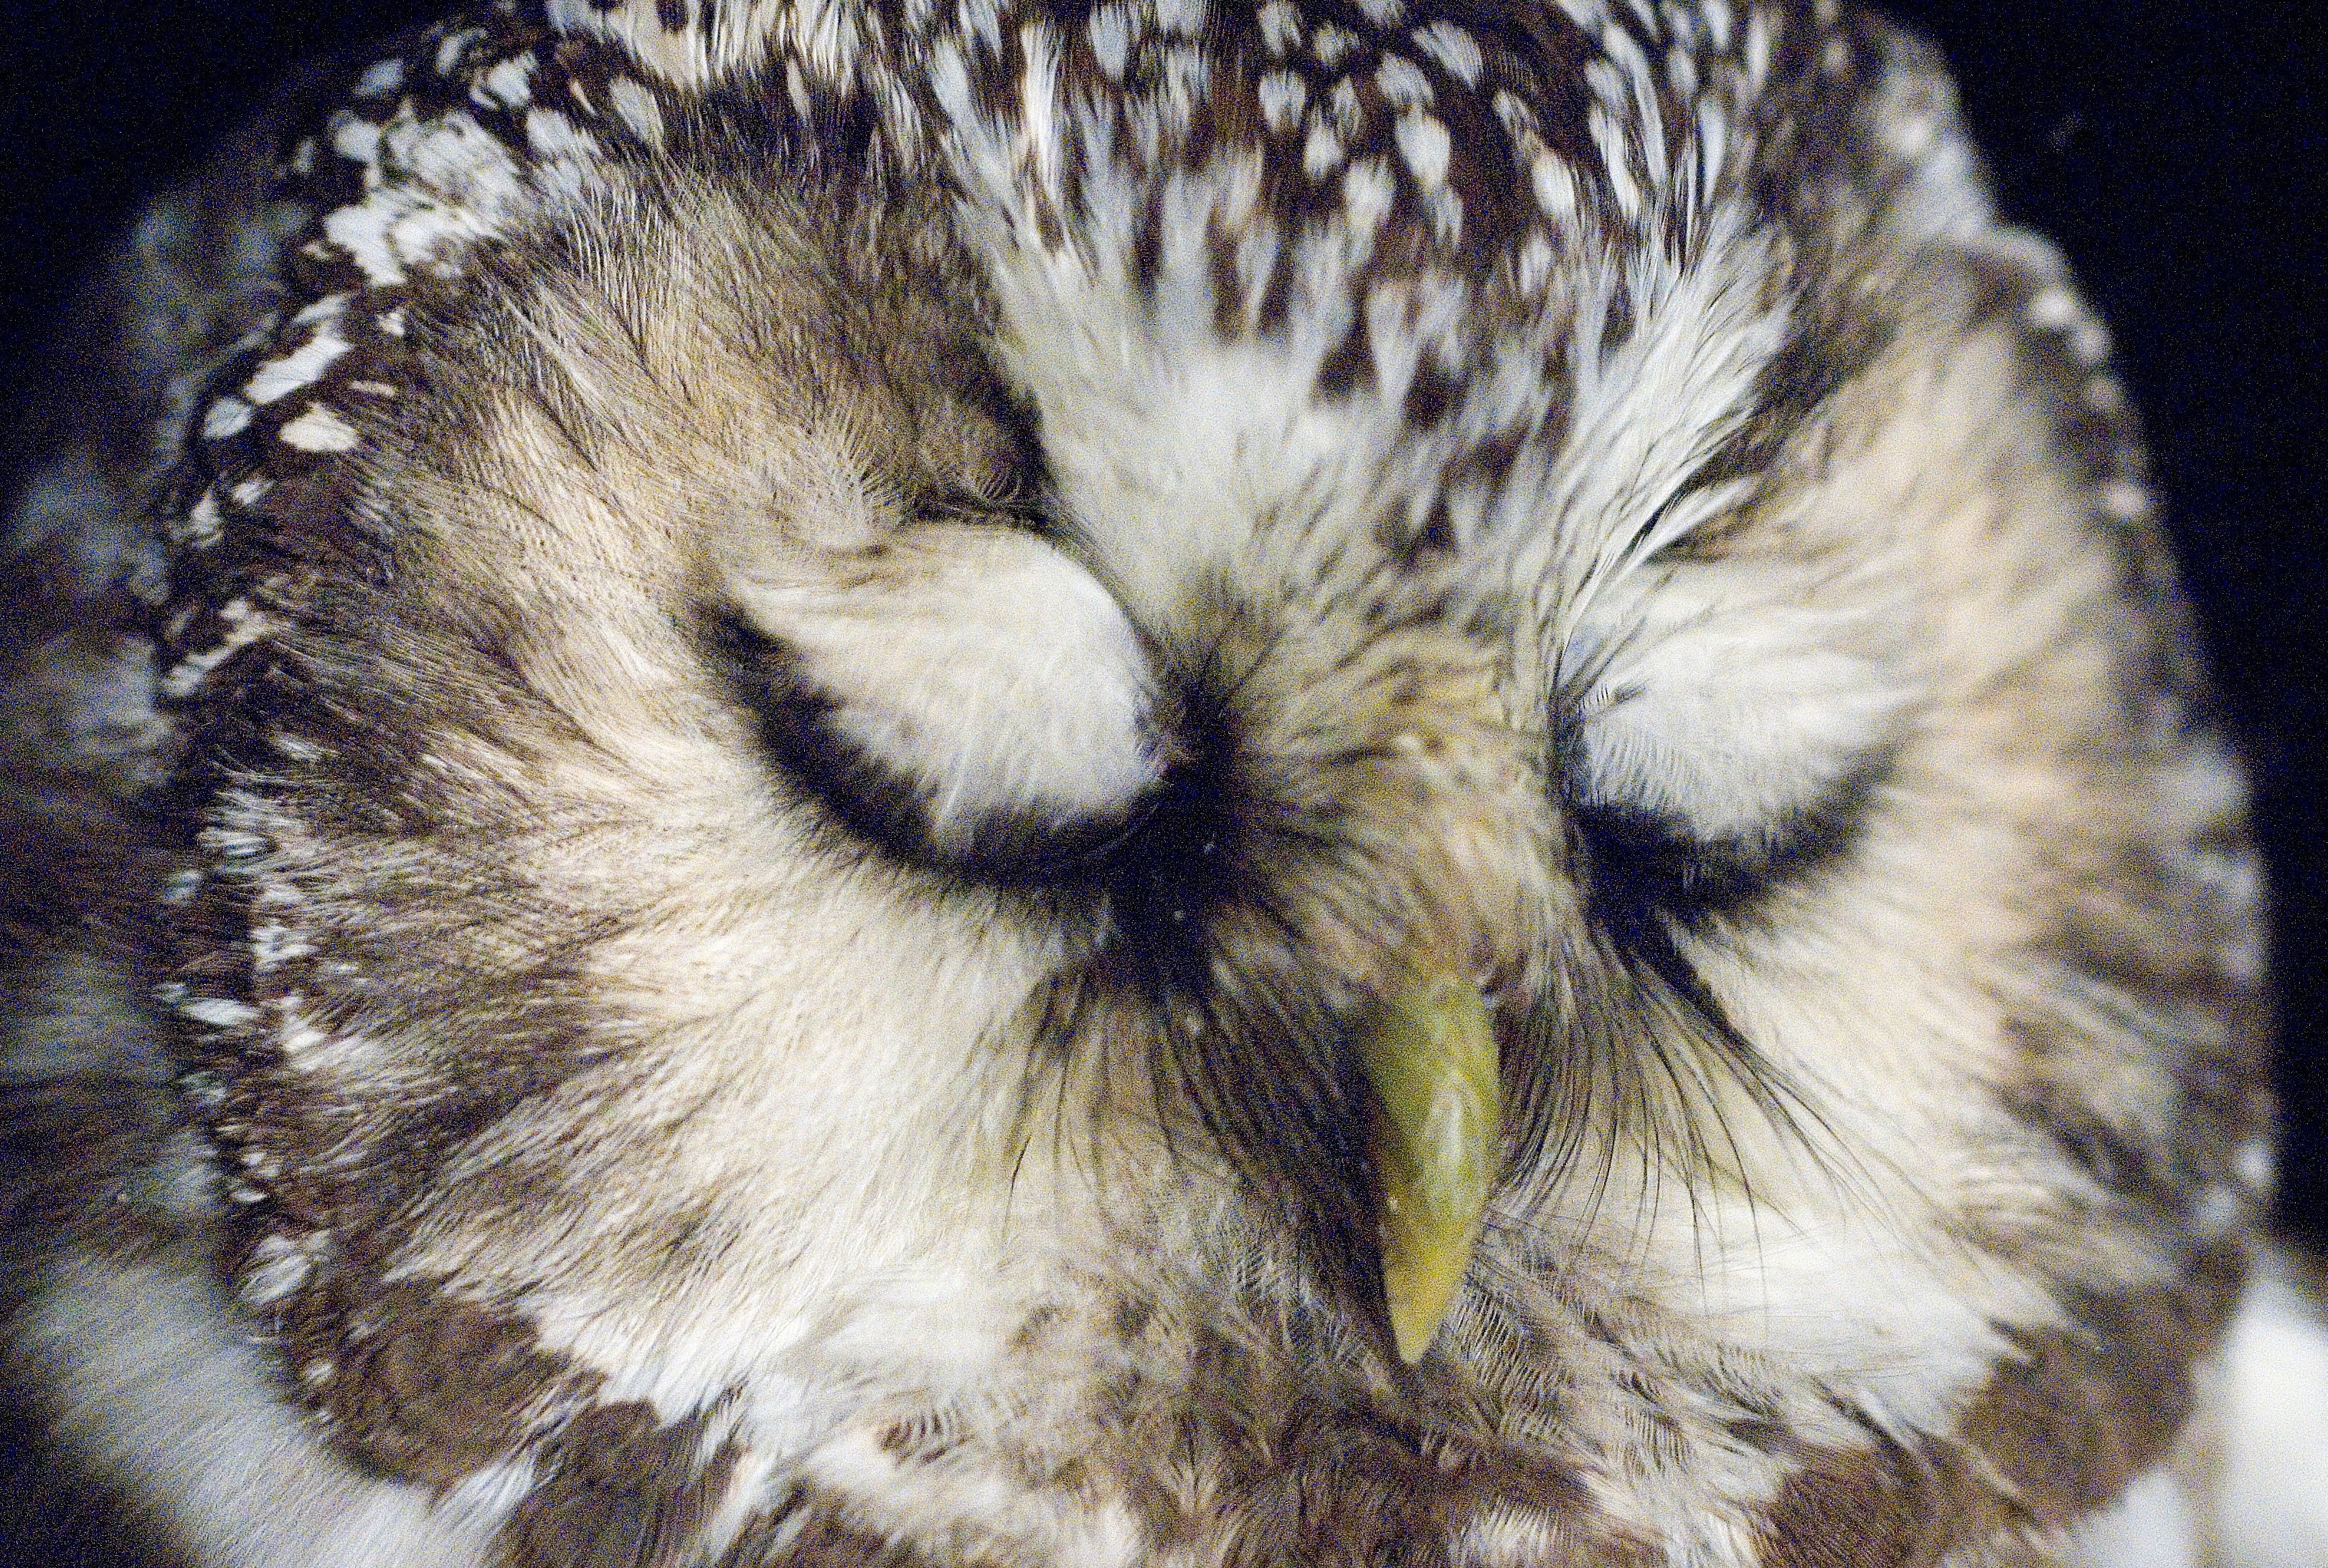 A sleepy owl